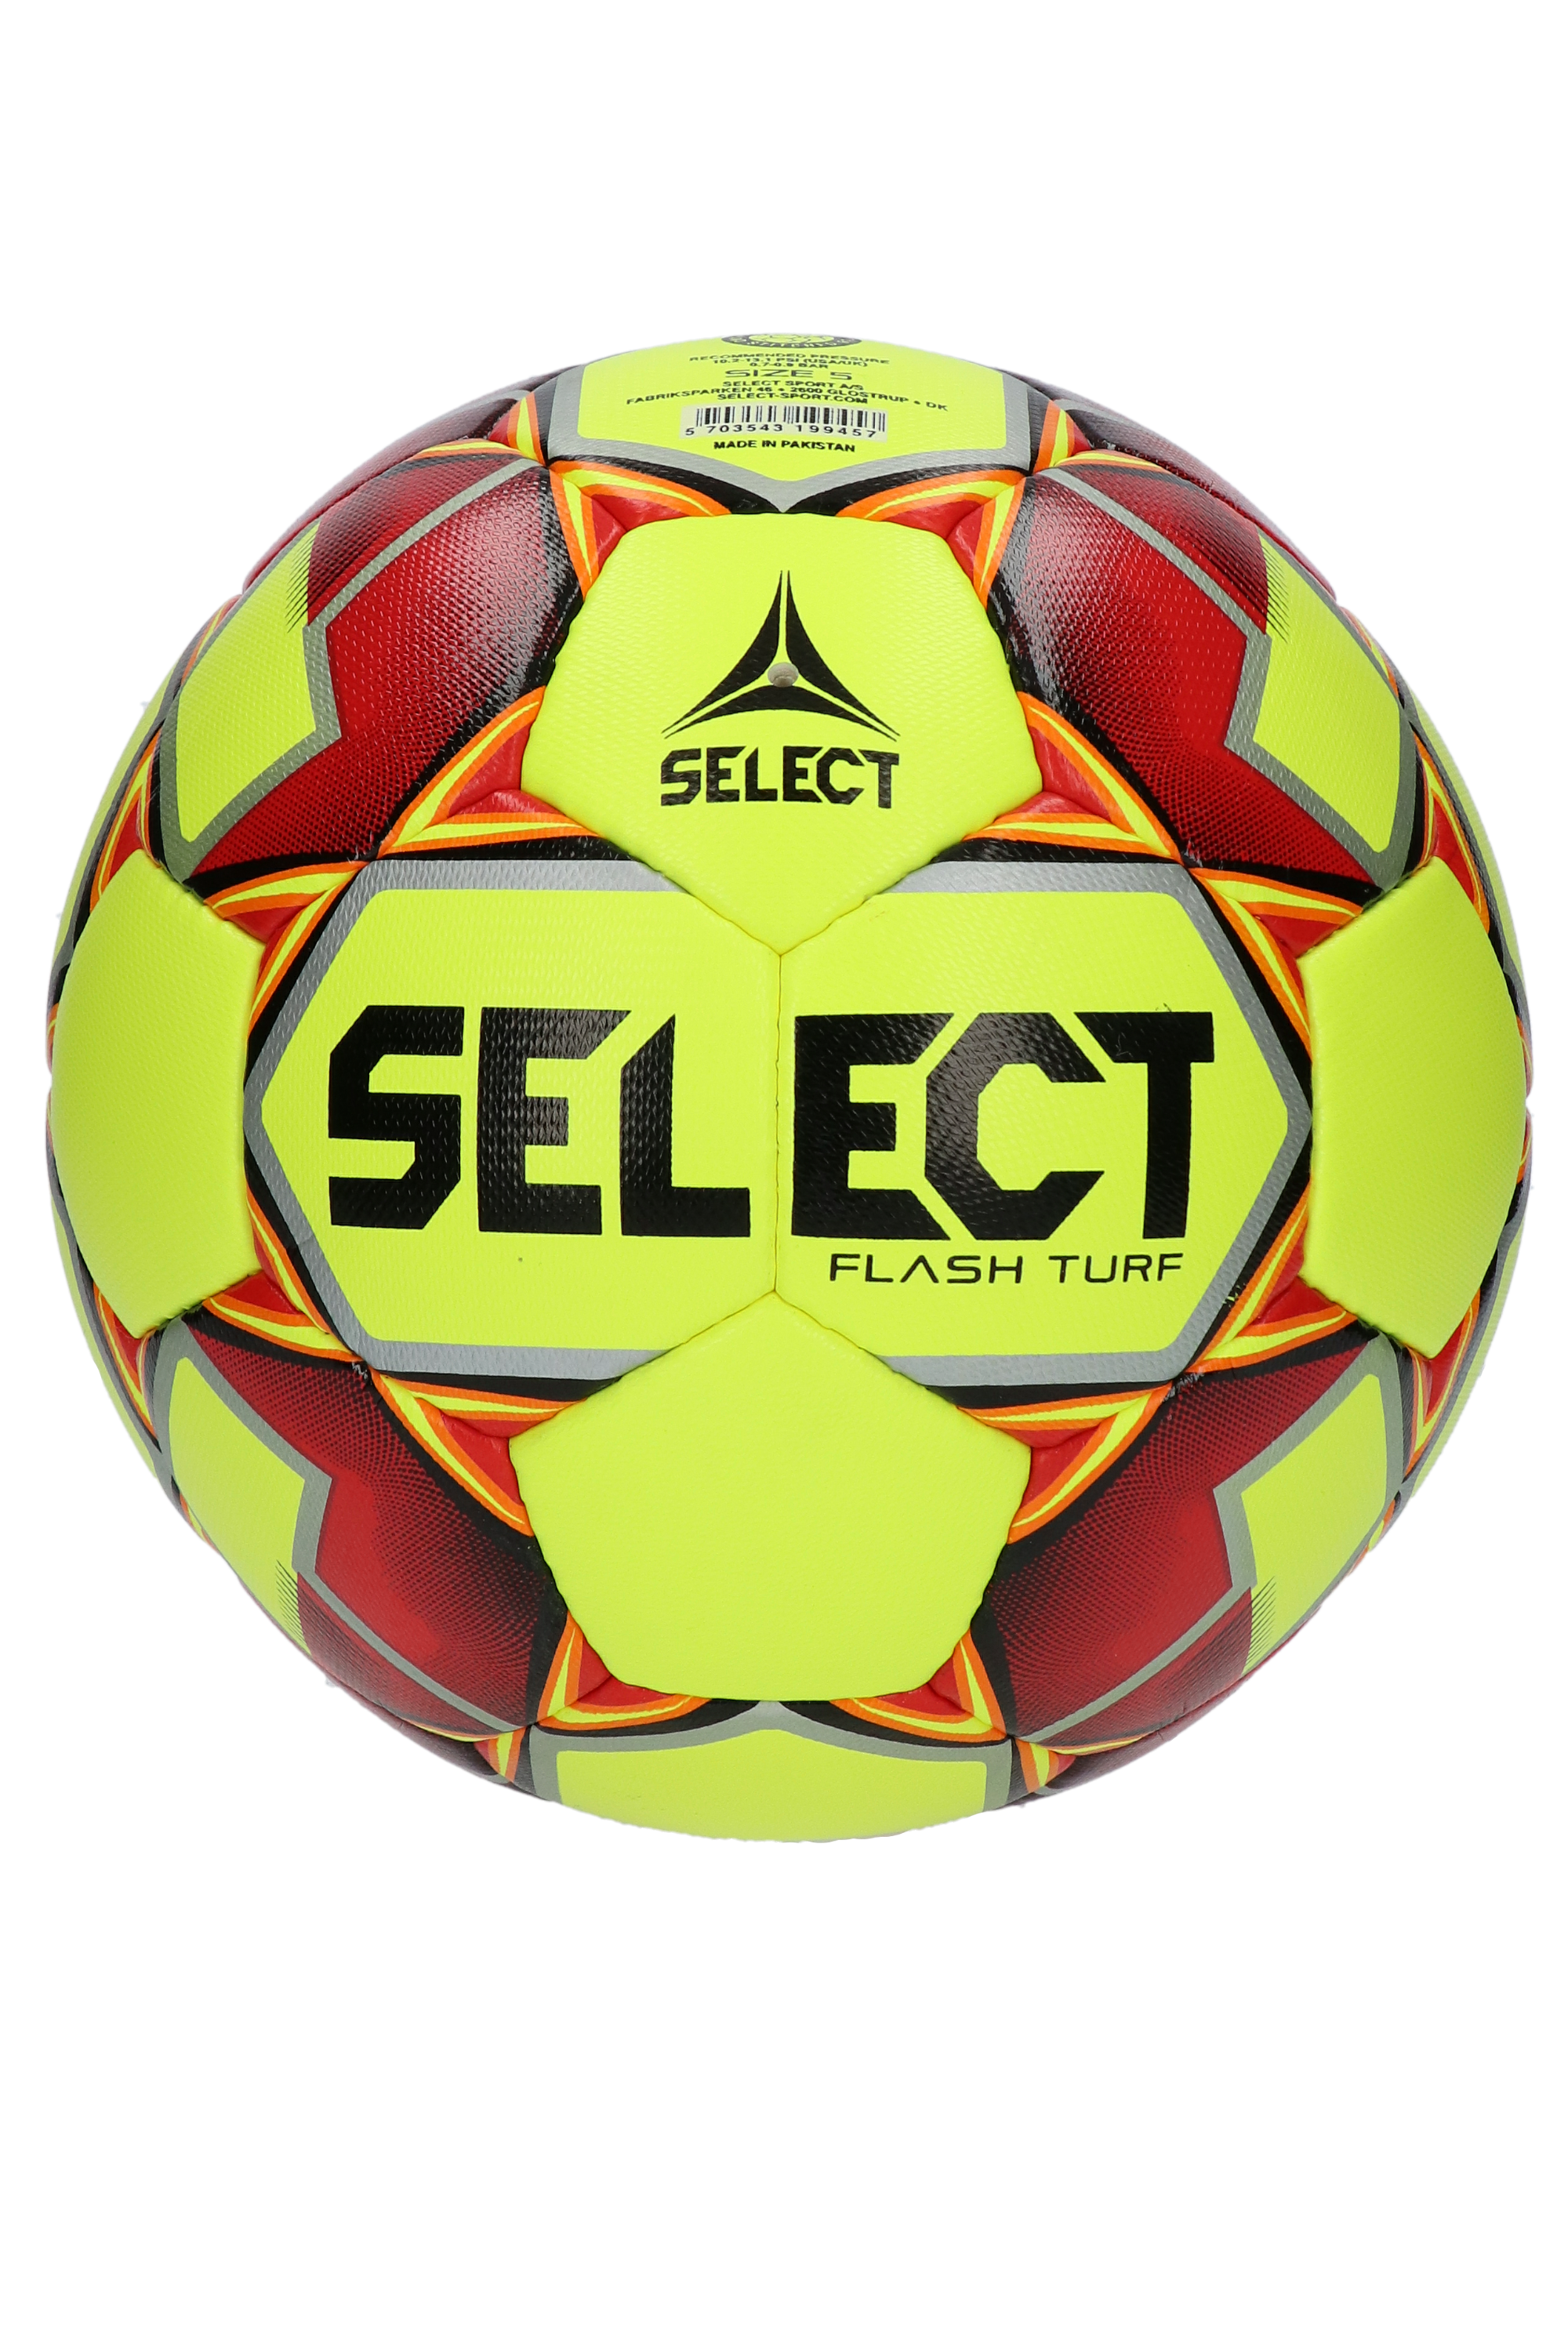 Football Select Flash Turf Ball S122590 size 4 Soccer Ballon Fussball Pelota 